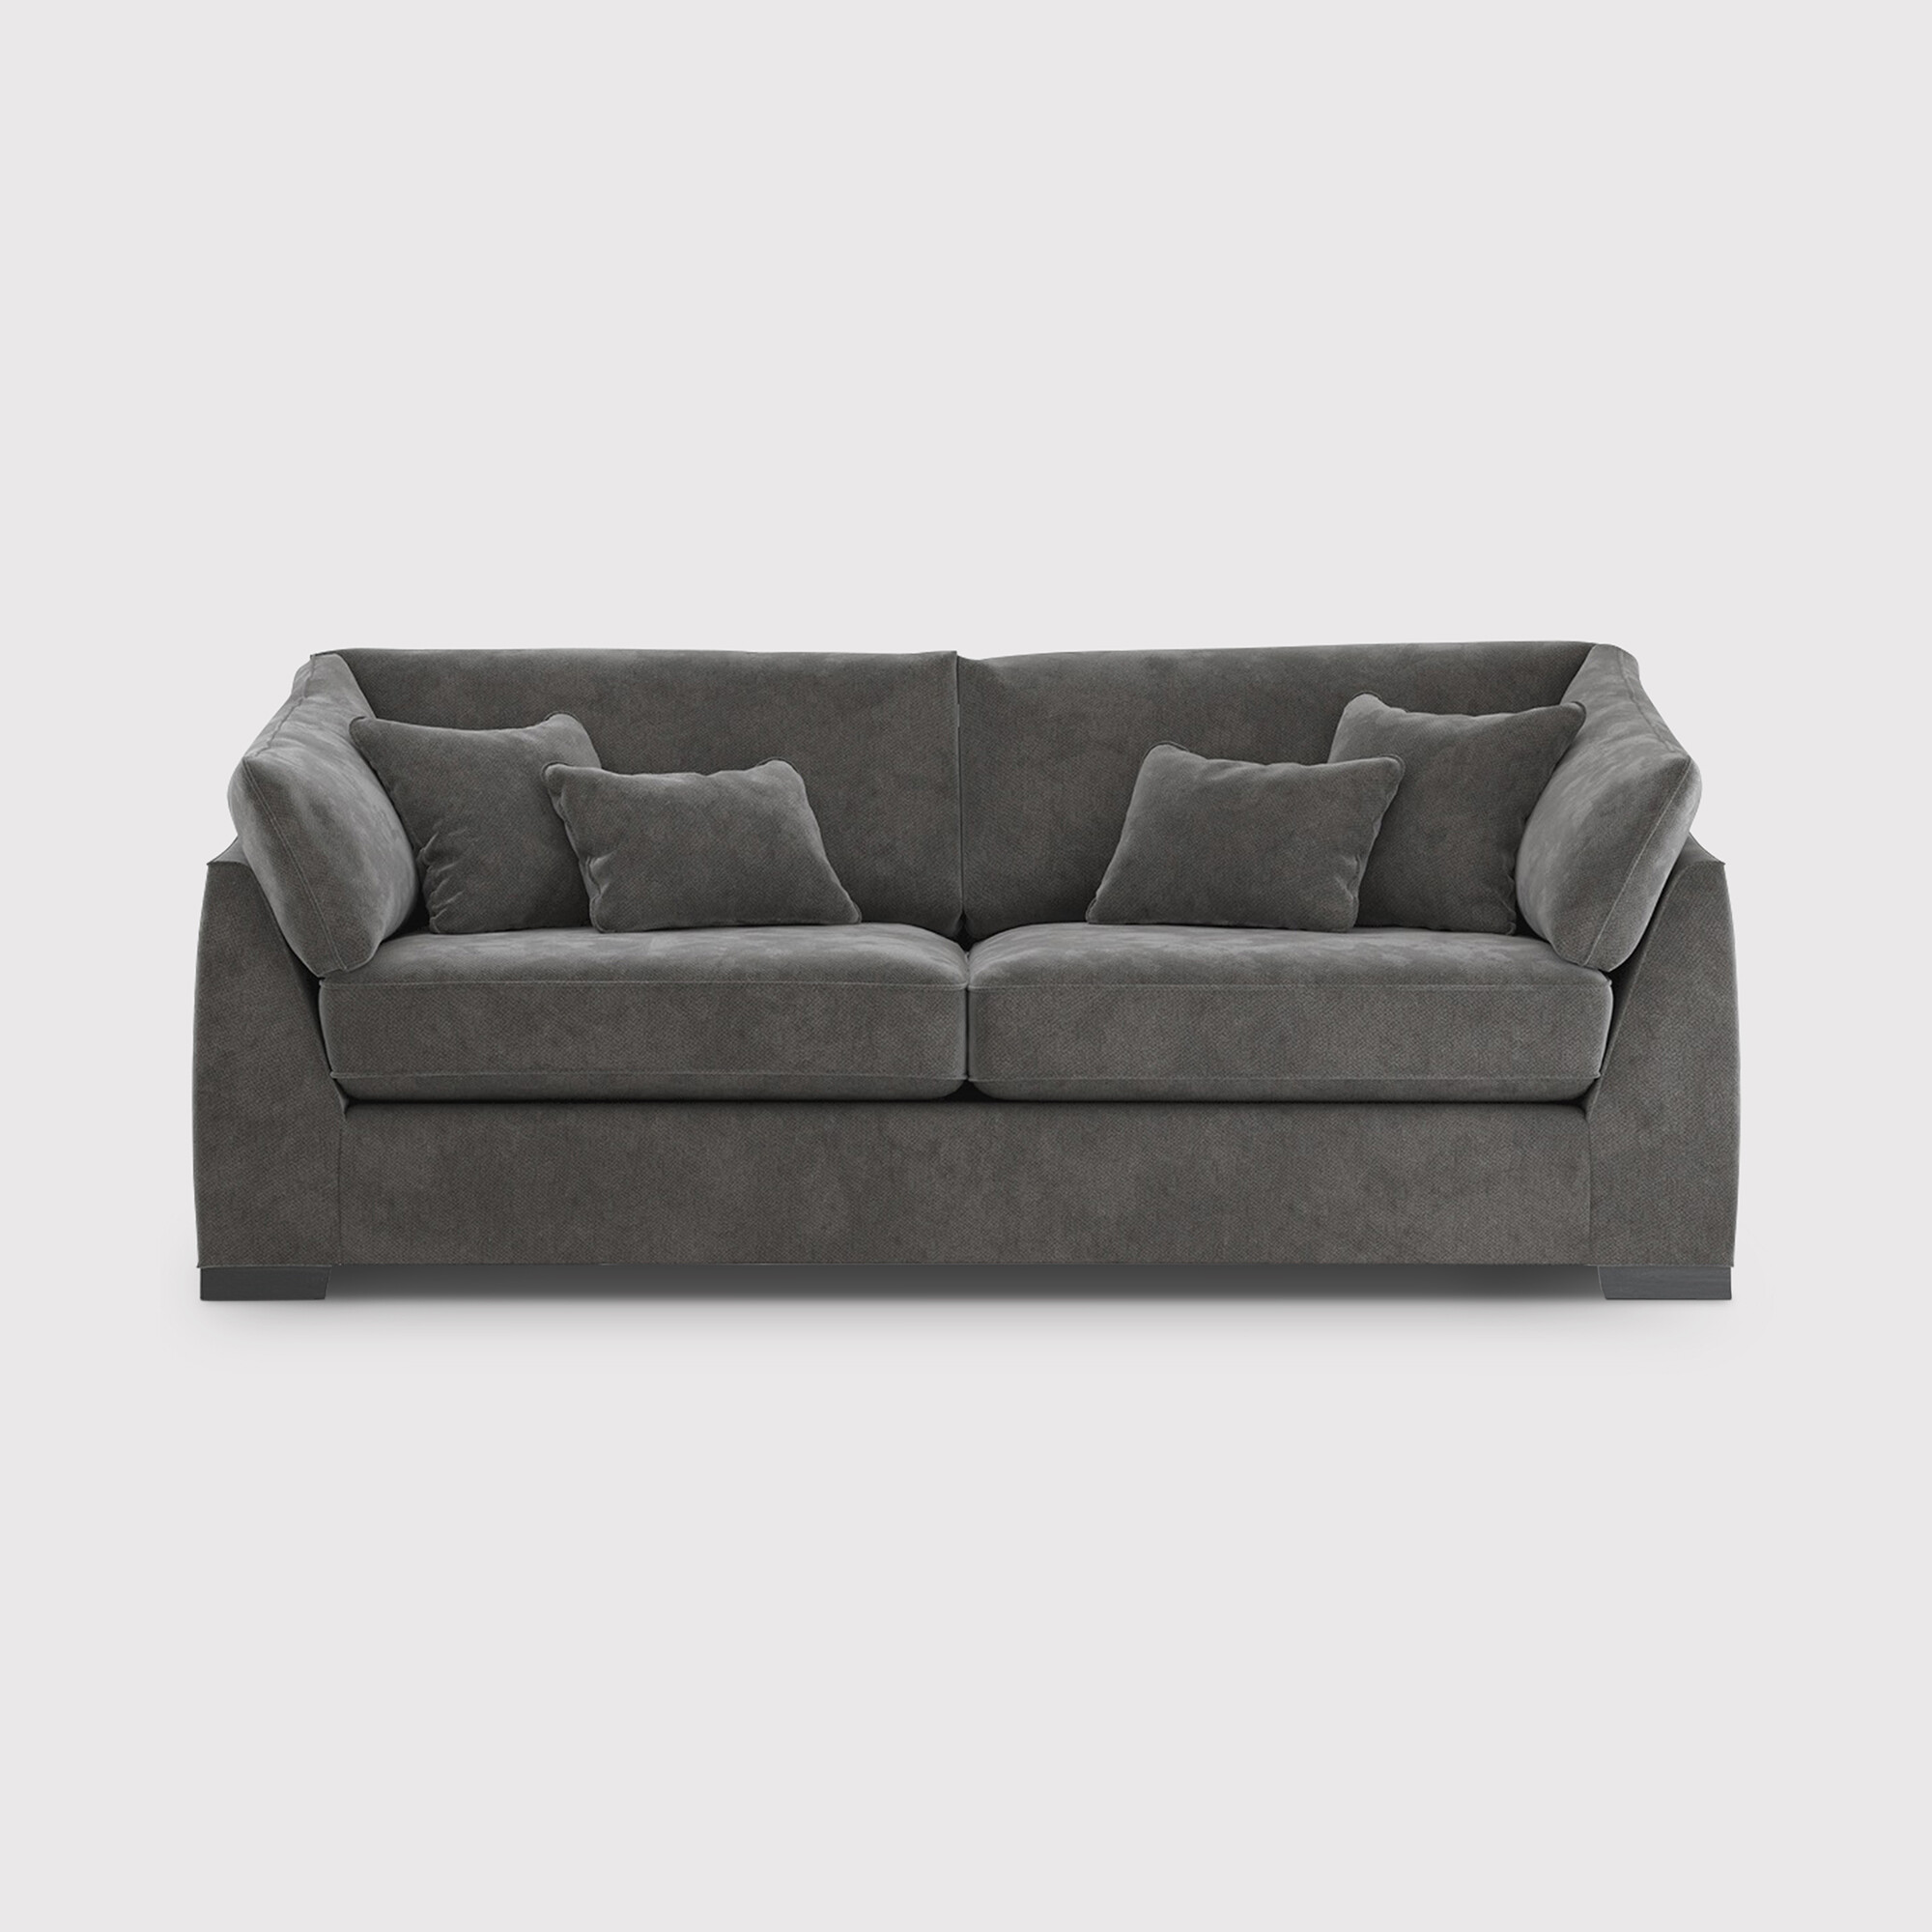 Borelly 3 Seater Sofa, Grey Fabric | Barker & Stonehouse